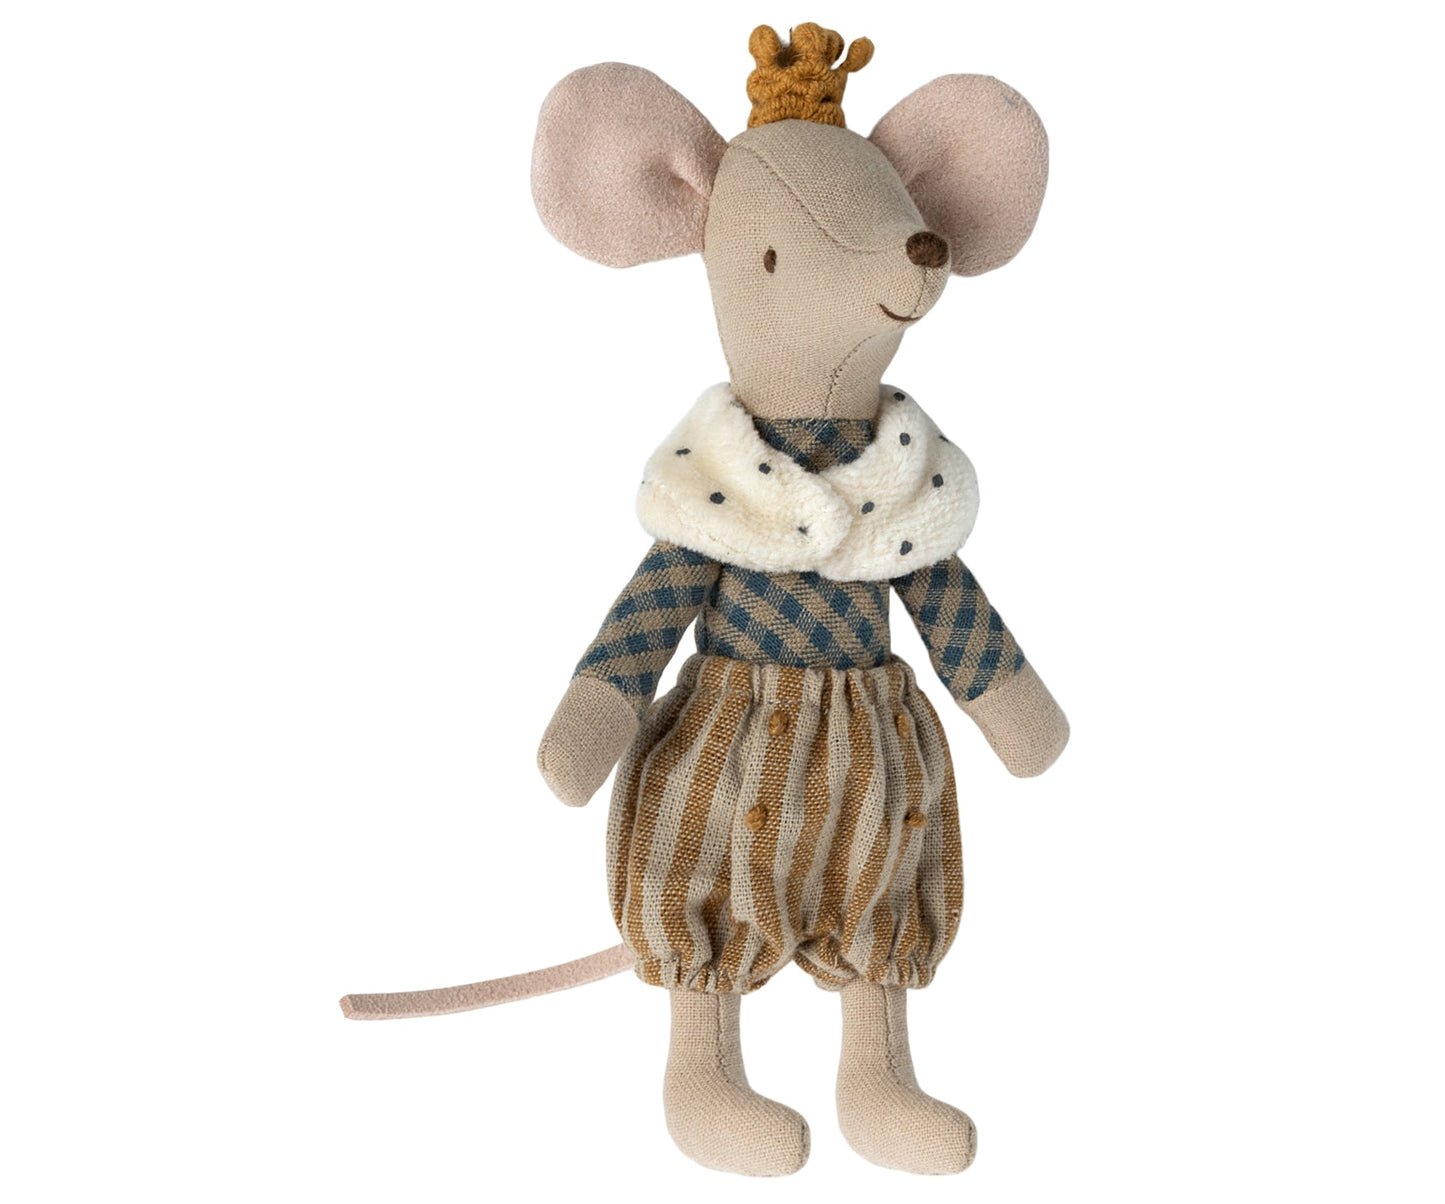 Maileg Princess & The Pea, Big Sister & Prince (New AW23) Big Brother Mice In Castle Gift Bag Bundle - Worth £70.25